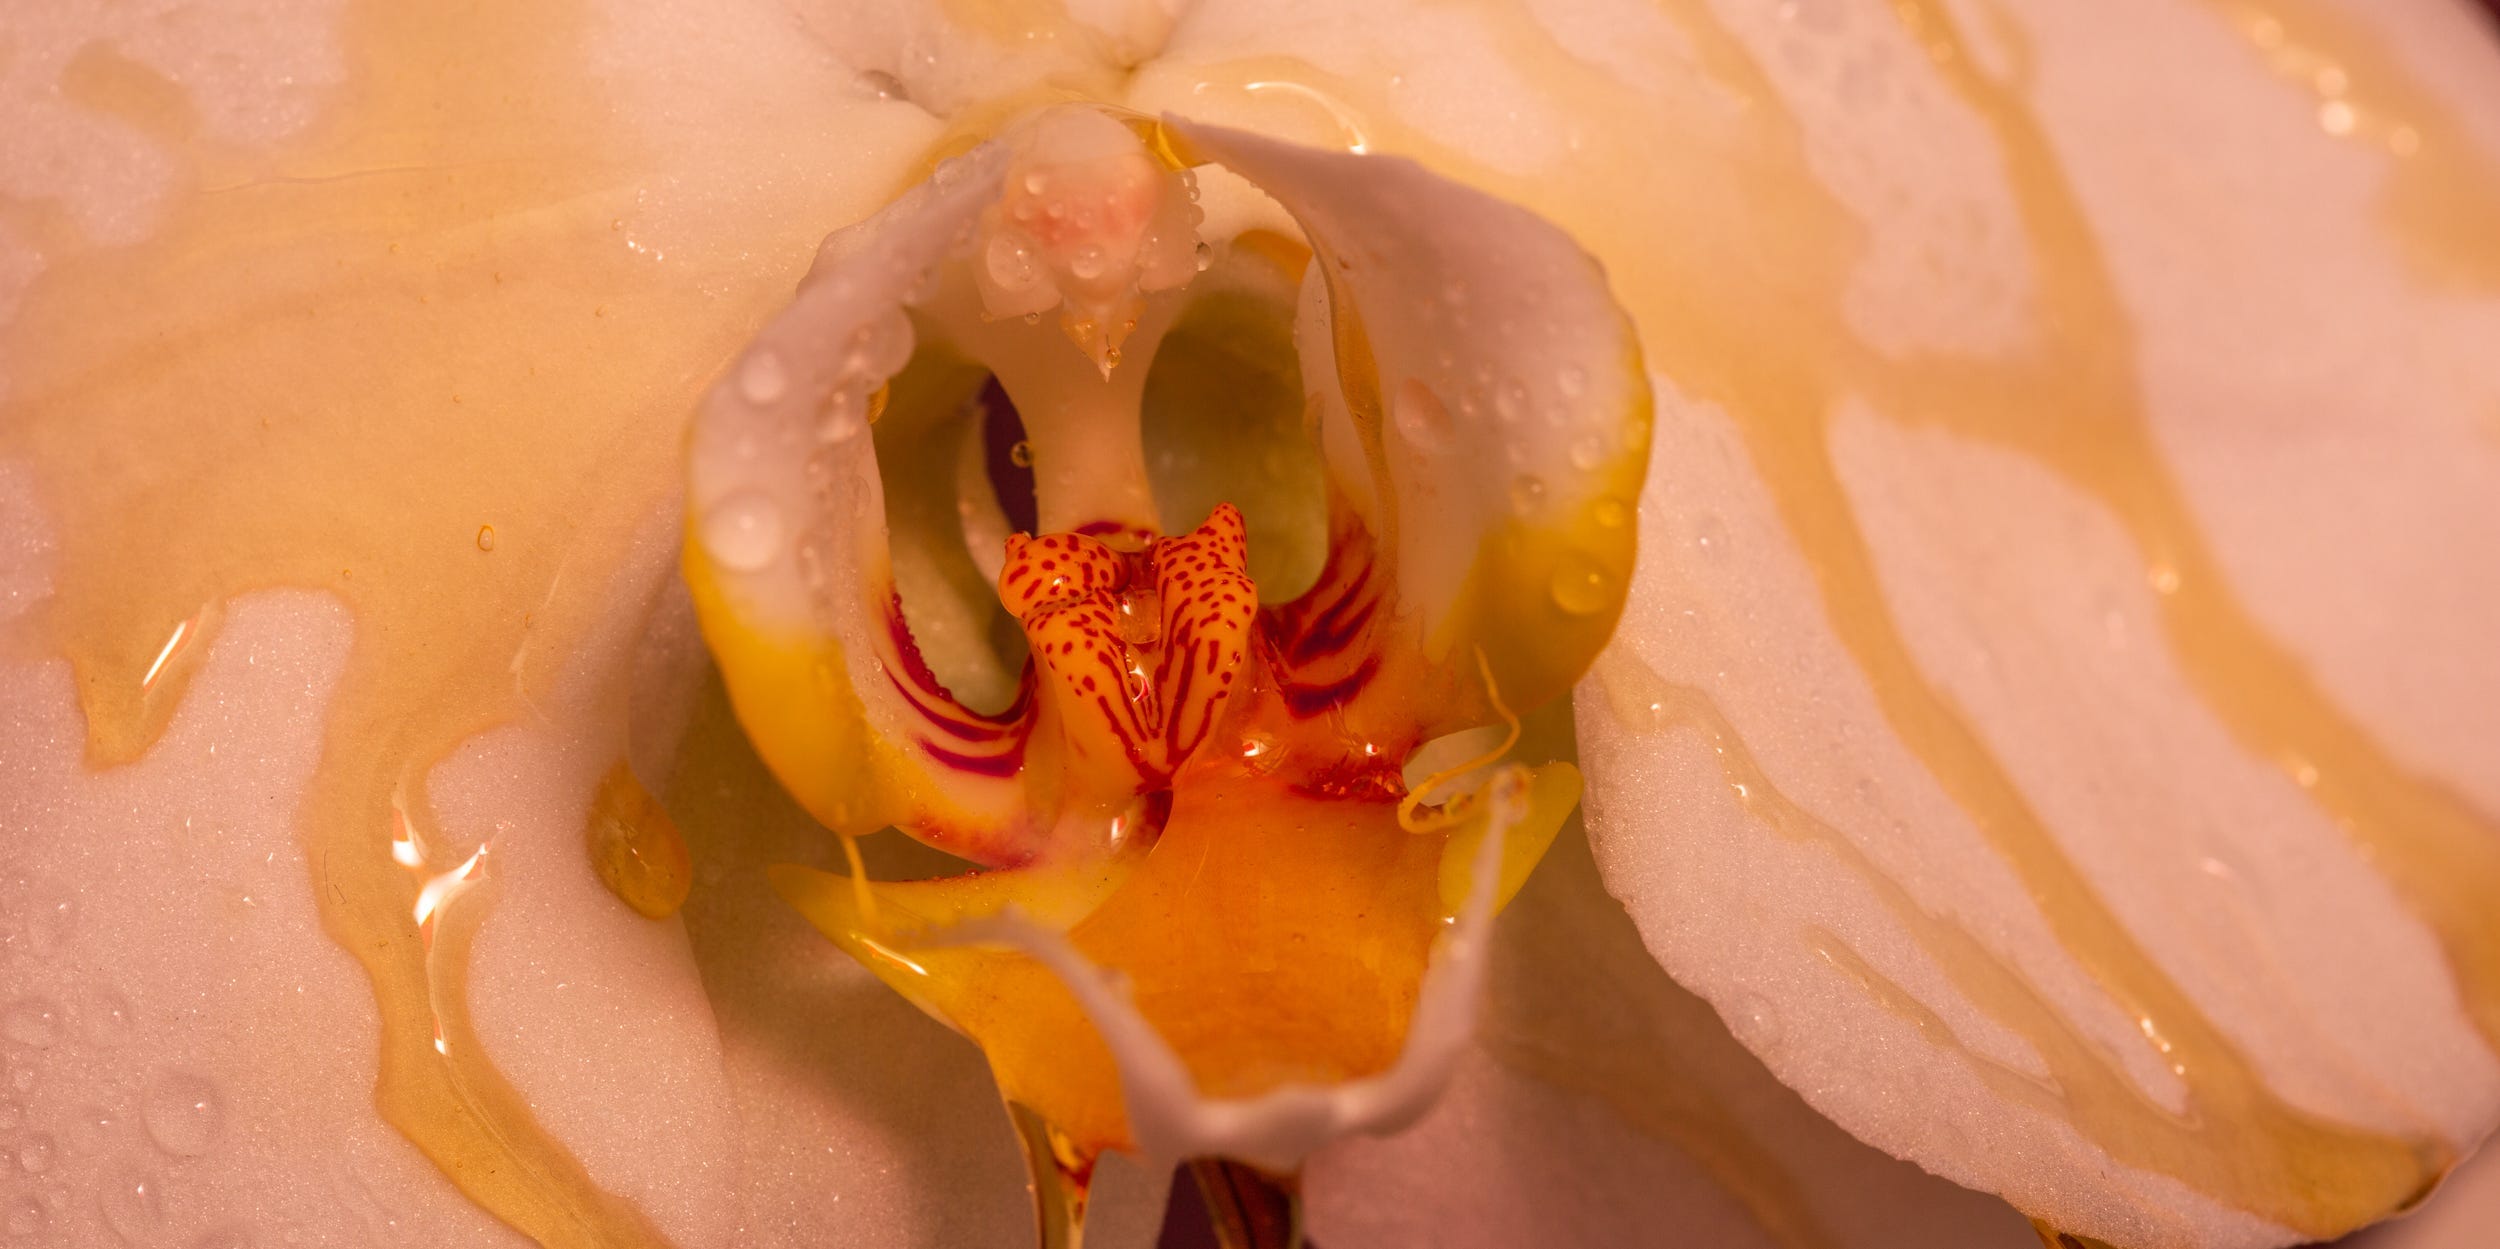 sex health sexual genitals female male anatomy orchid flower crotch anus anal orgasm pleasure reproduction period underwear